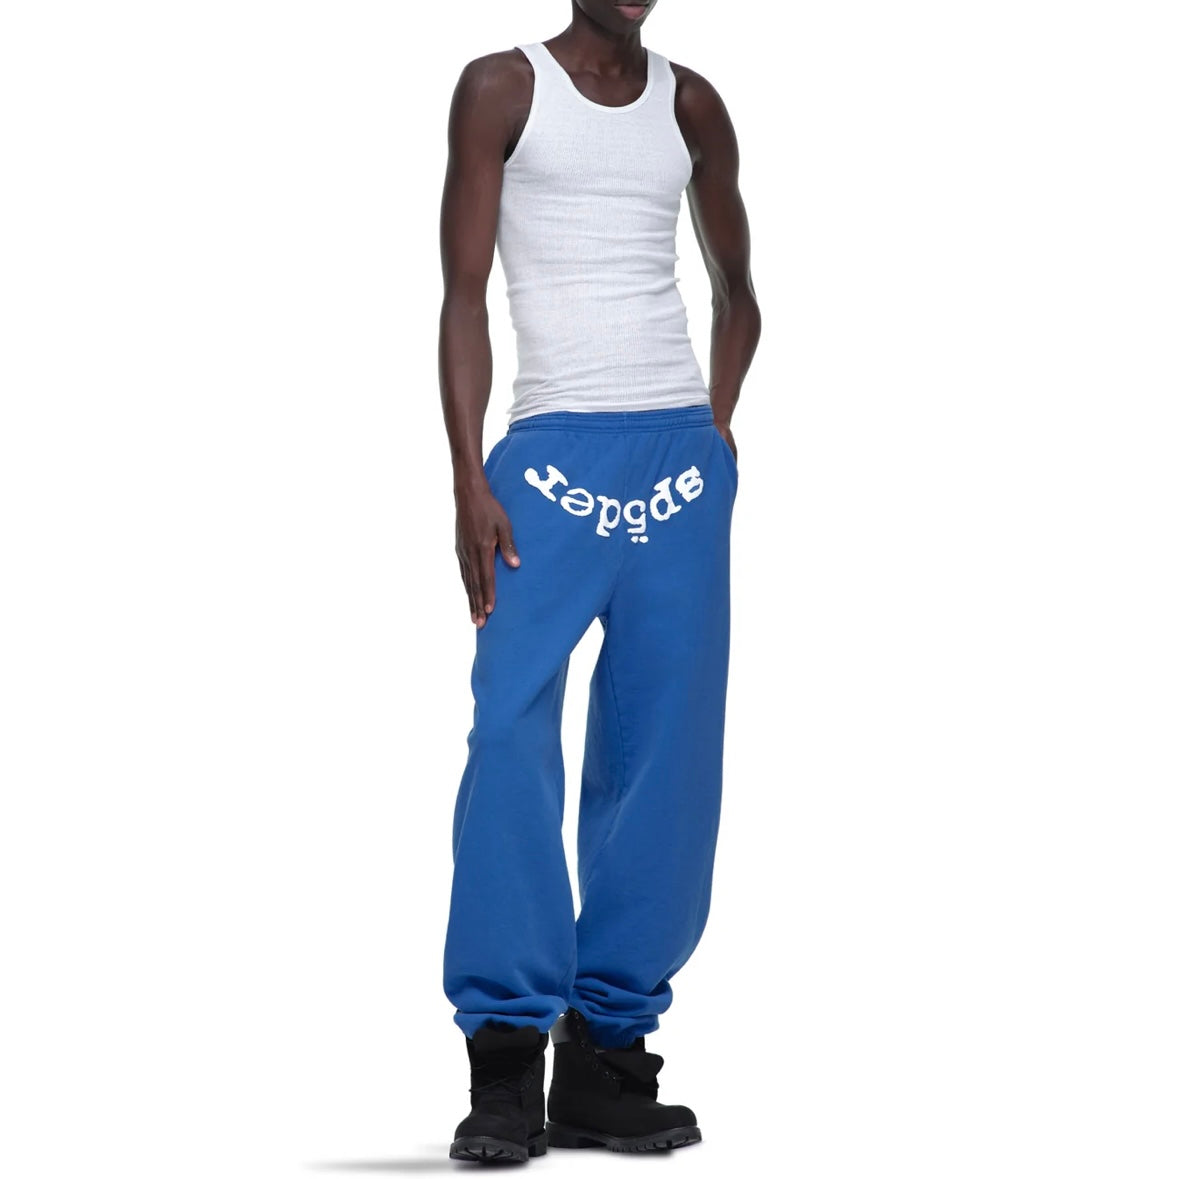 Sp5der Blue White Legacy Sweatpants On Body Male